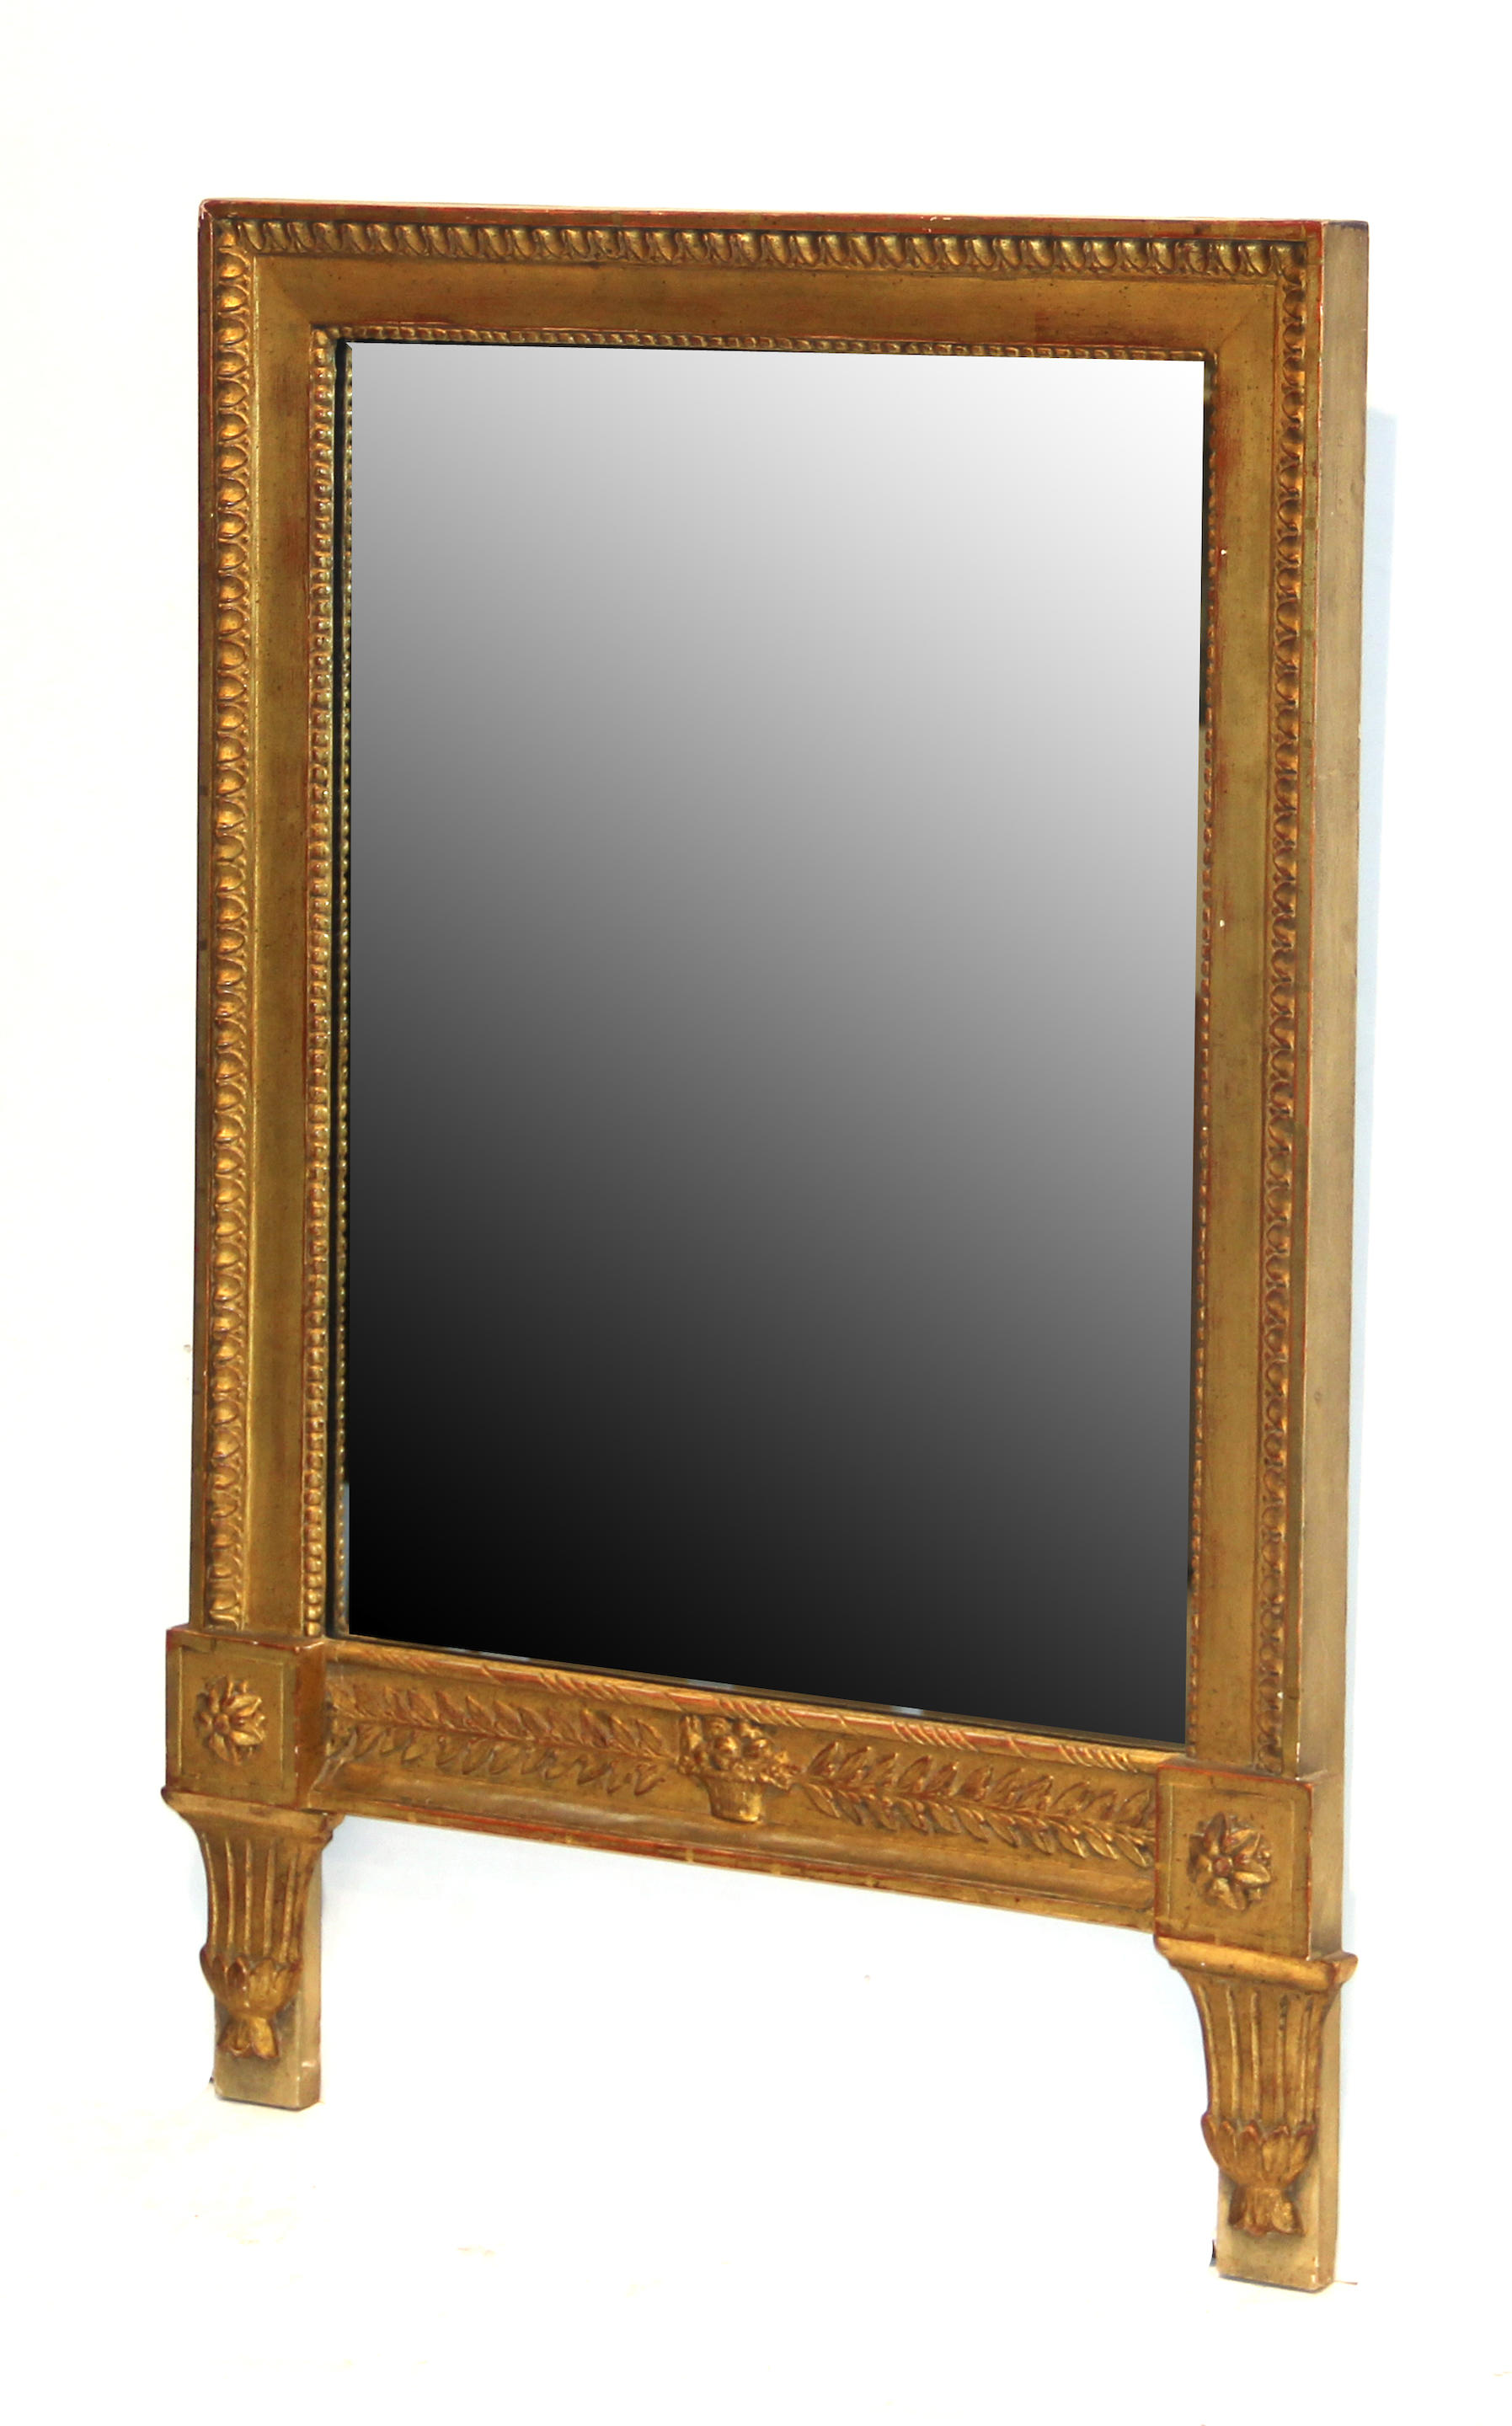 An Italian Neoclassical style giltwood mirror